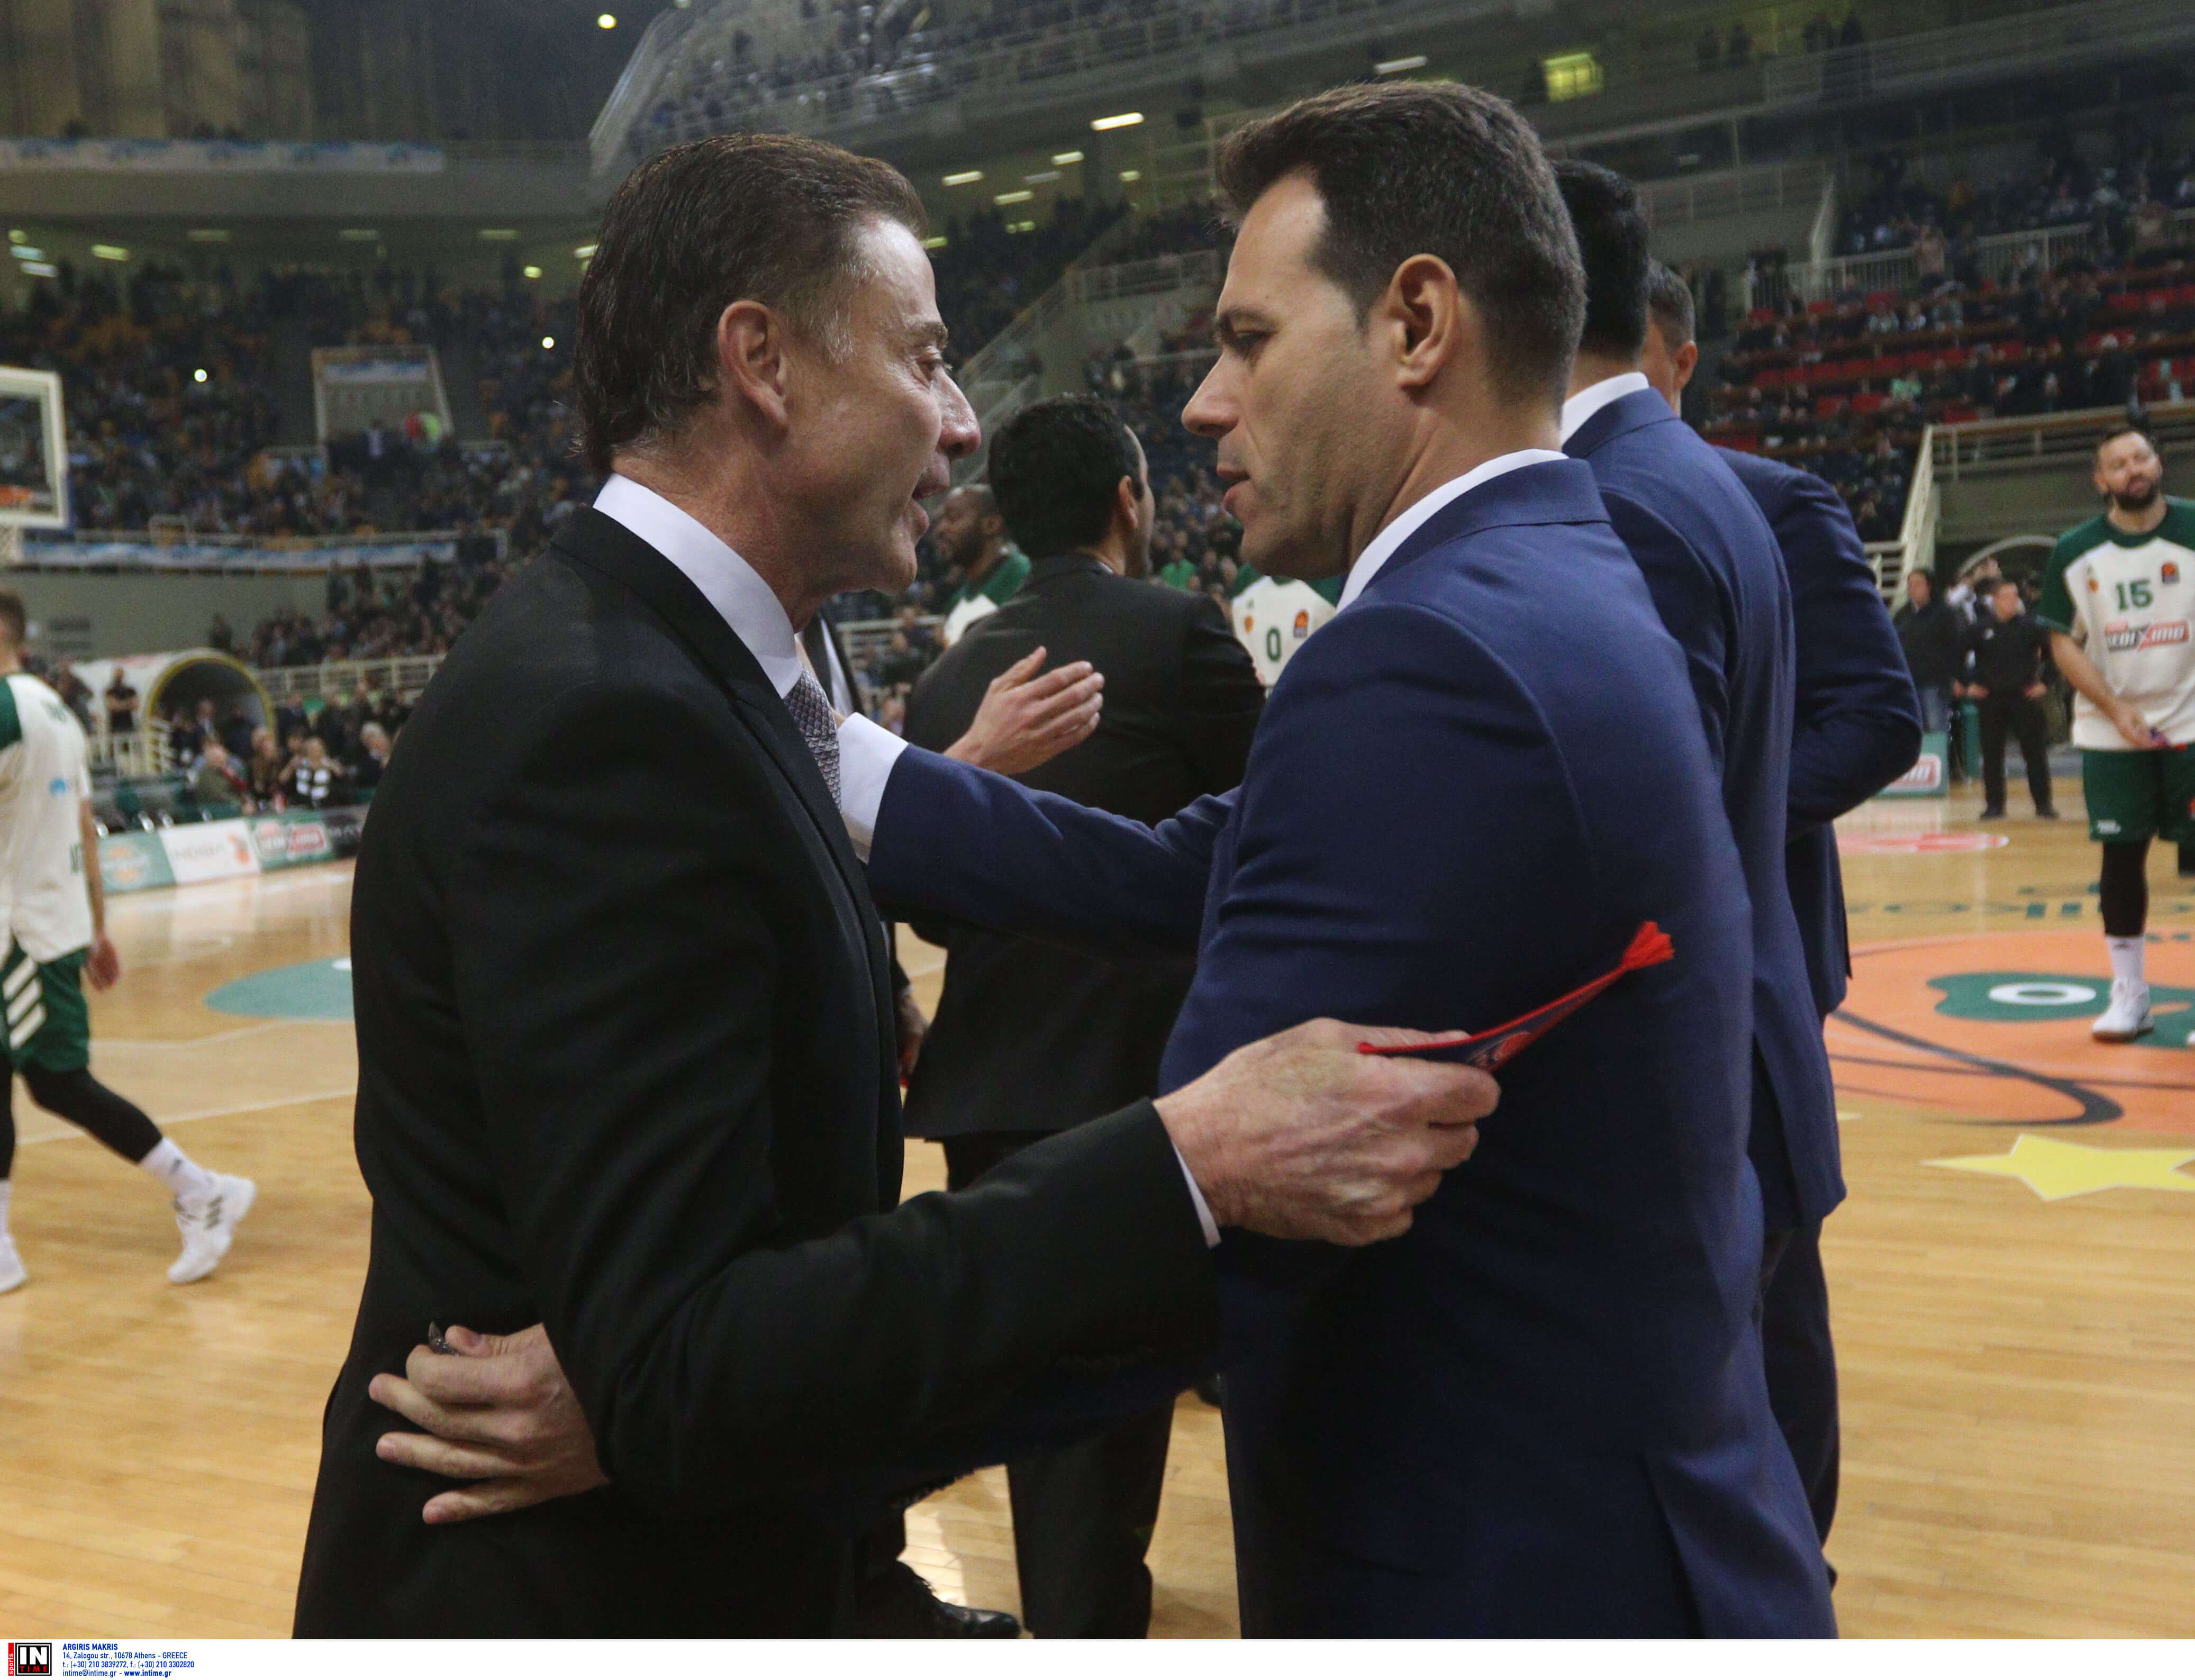 Euroleague: Αποθέωσε τον Ιτούδη ο Πιτίνο! “Εξαιρετικό coaching από τον Έλληνα” [pics]